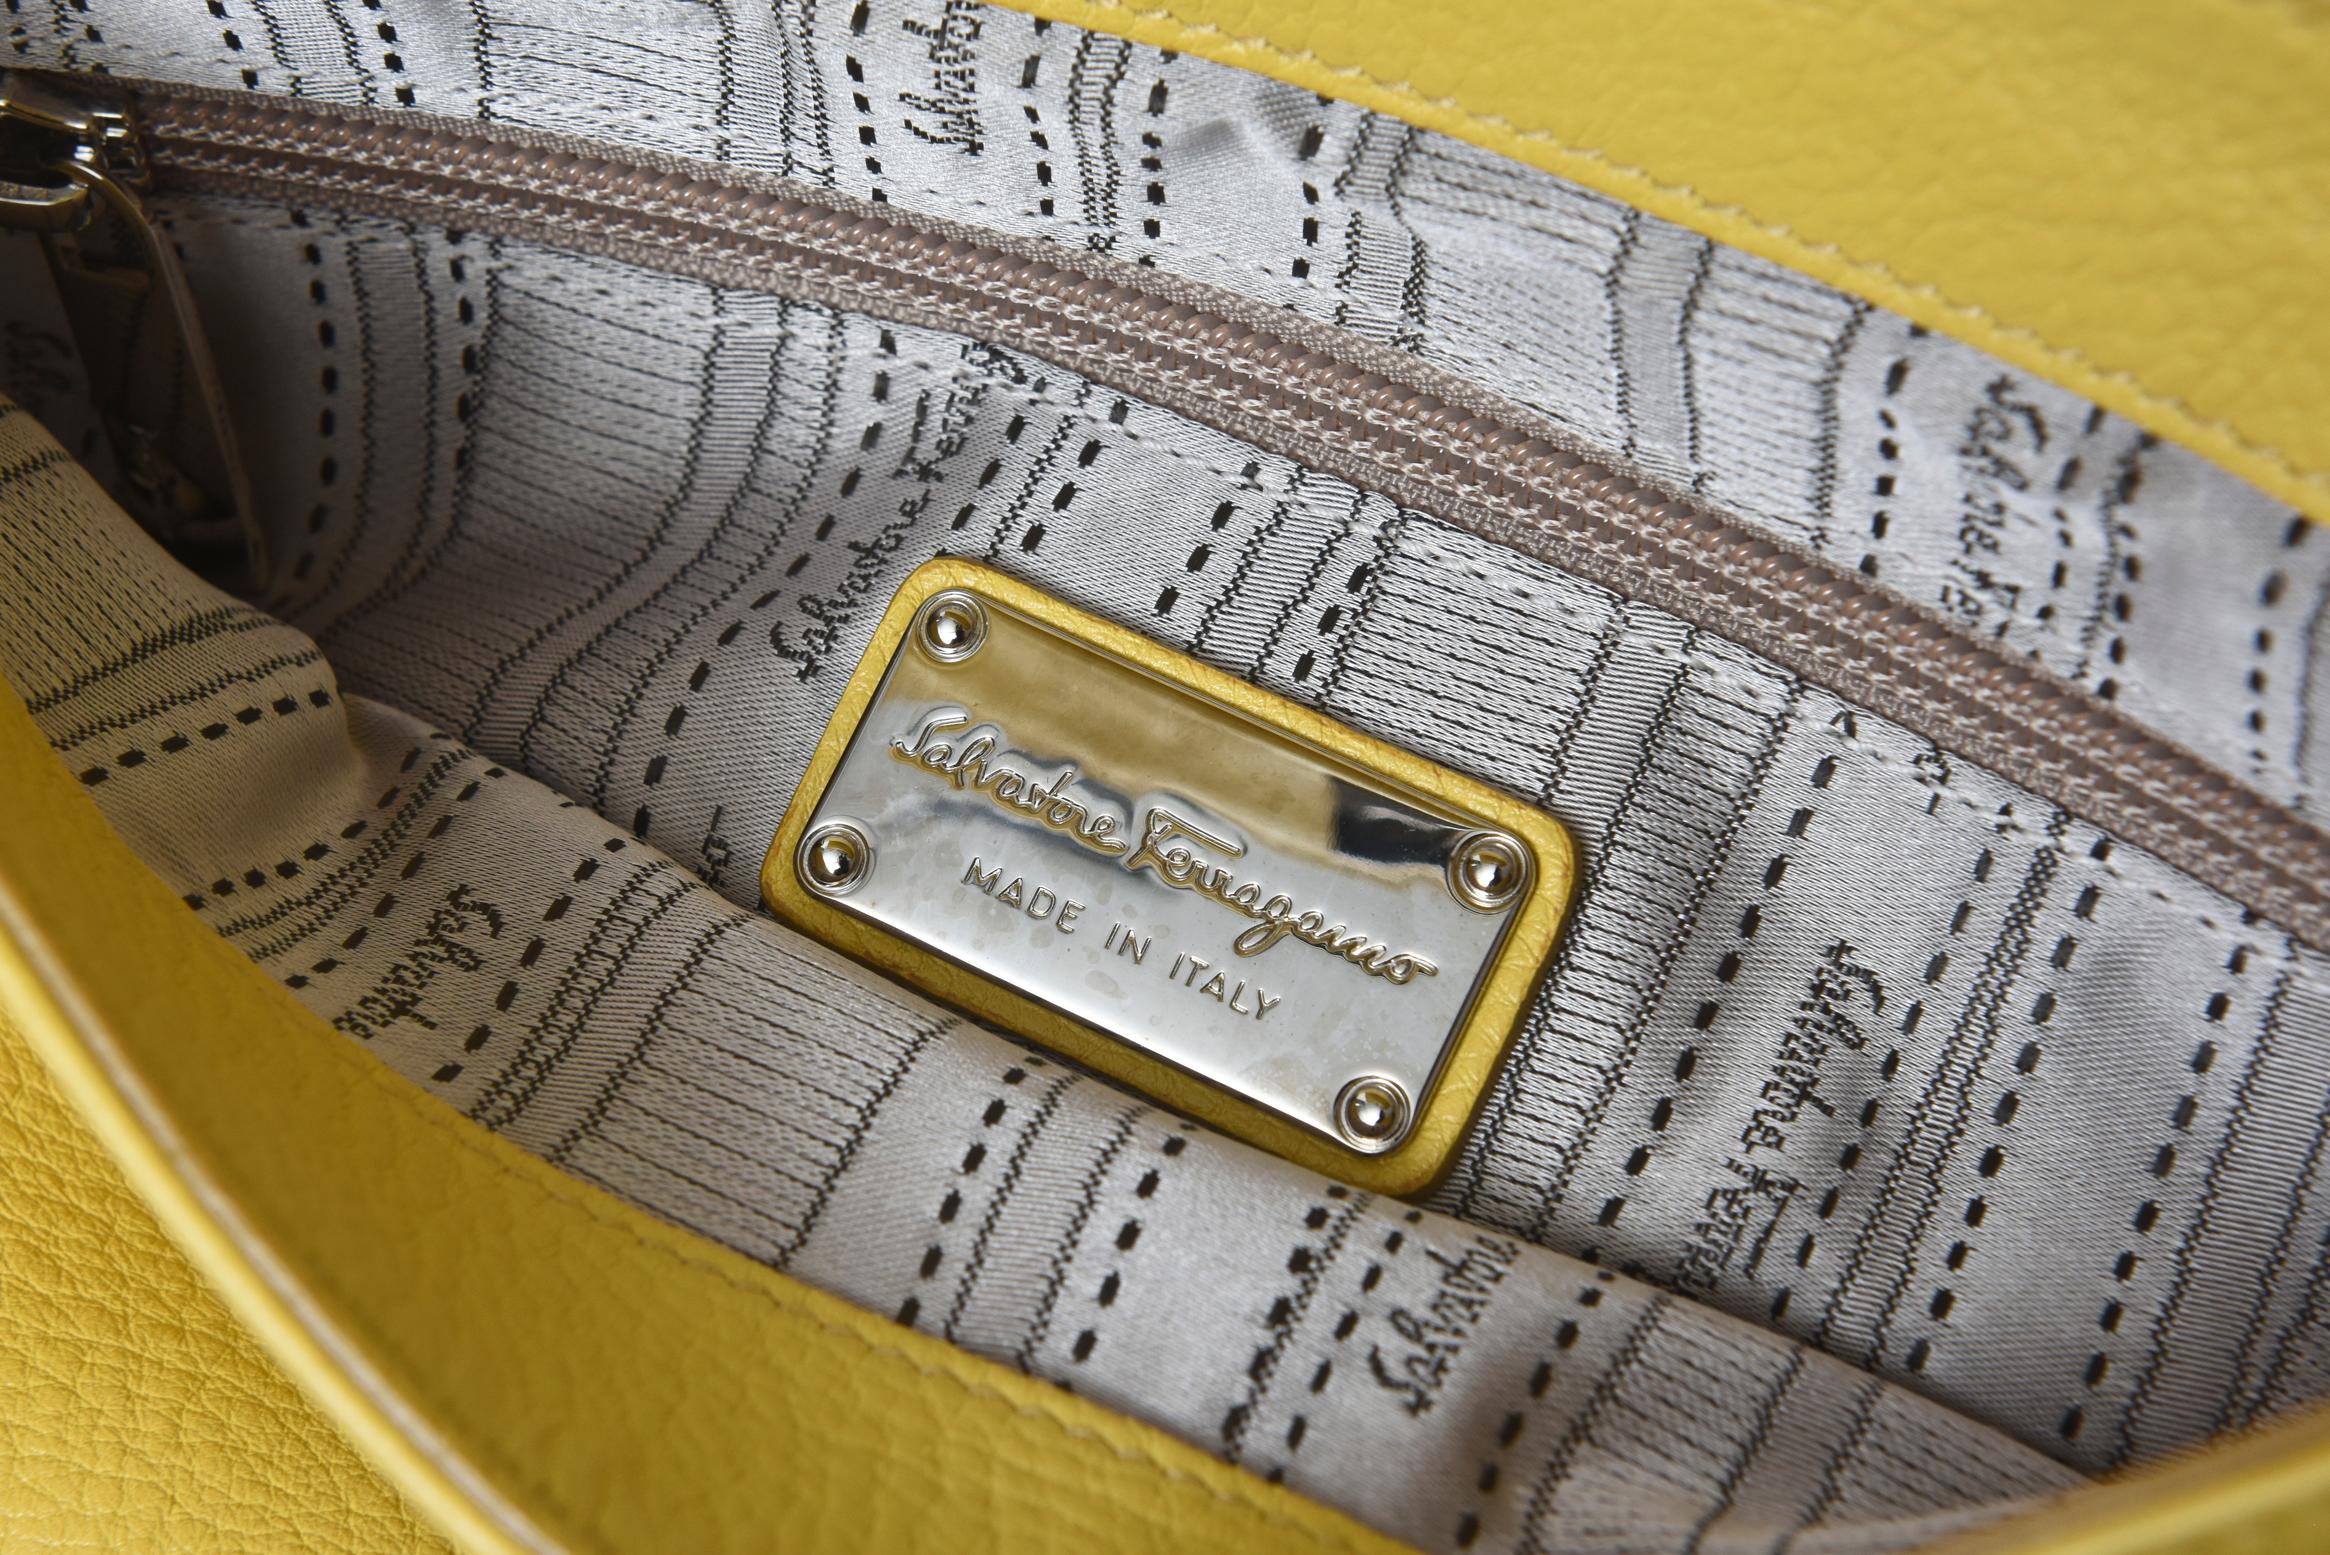 yellow leather satchel